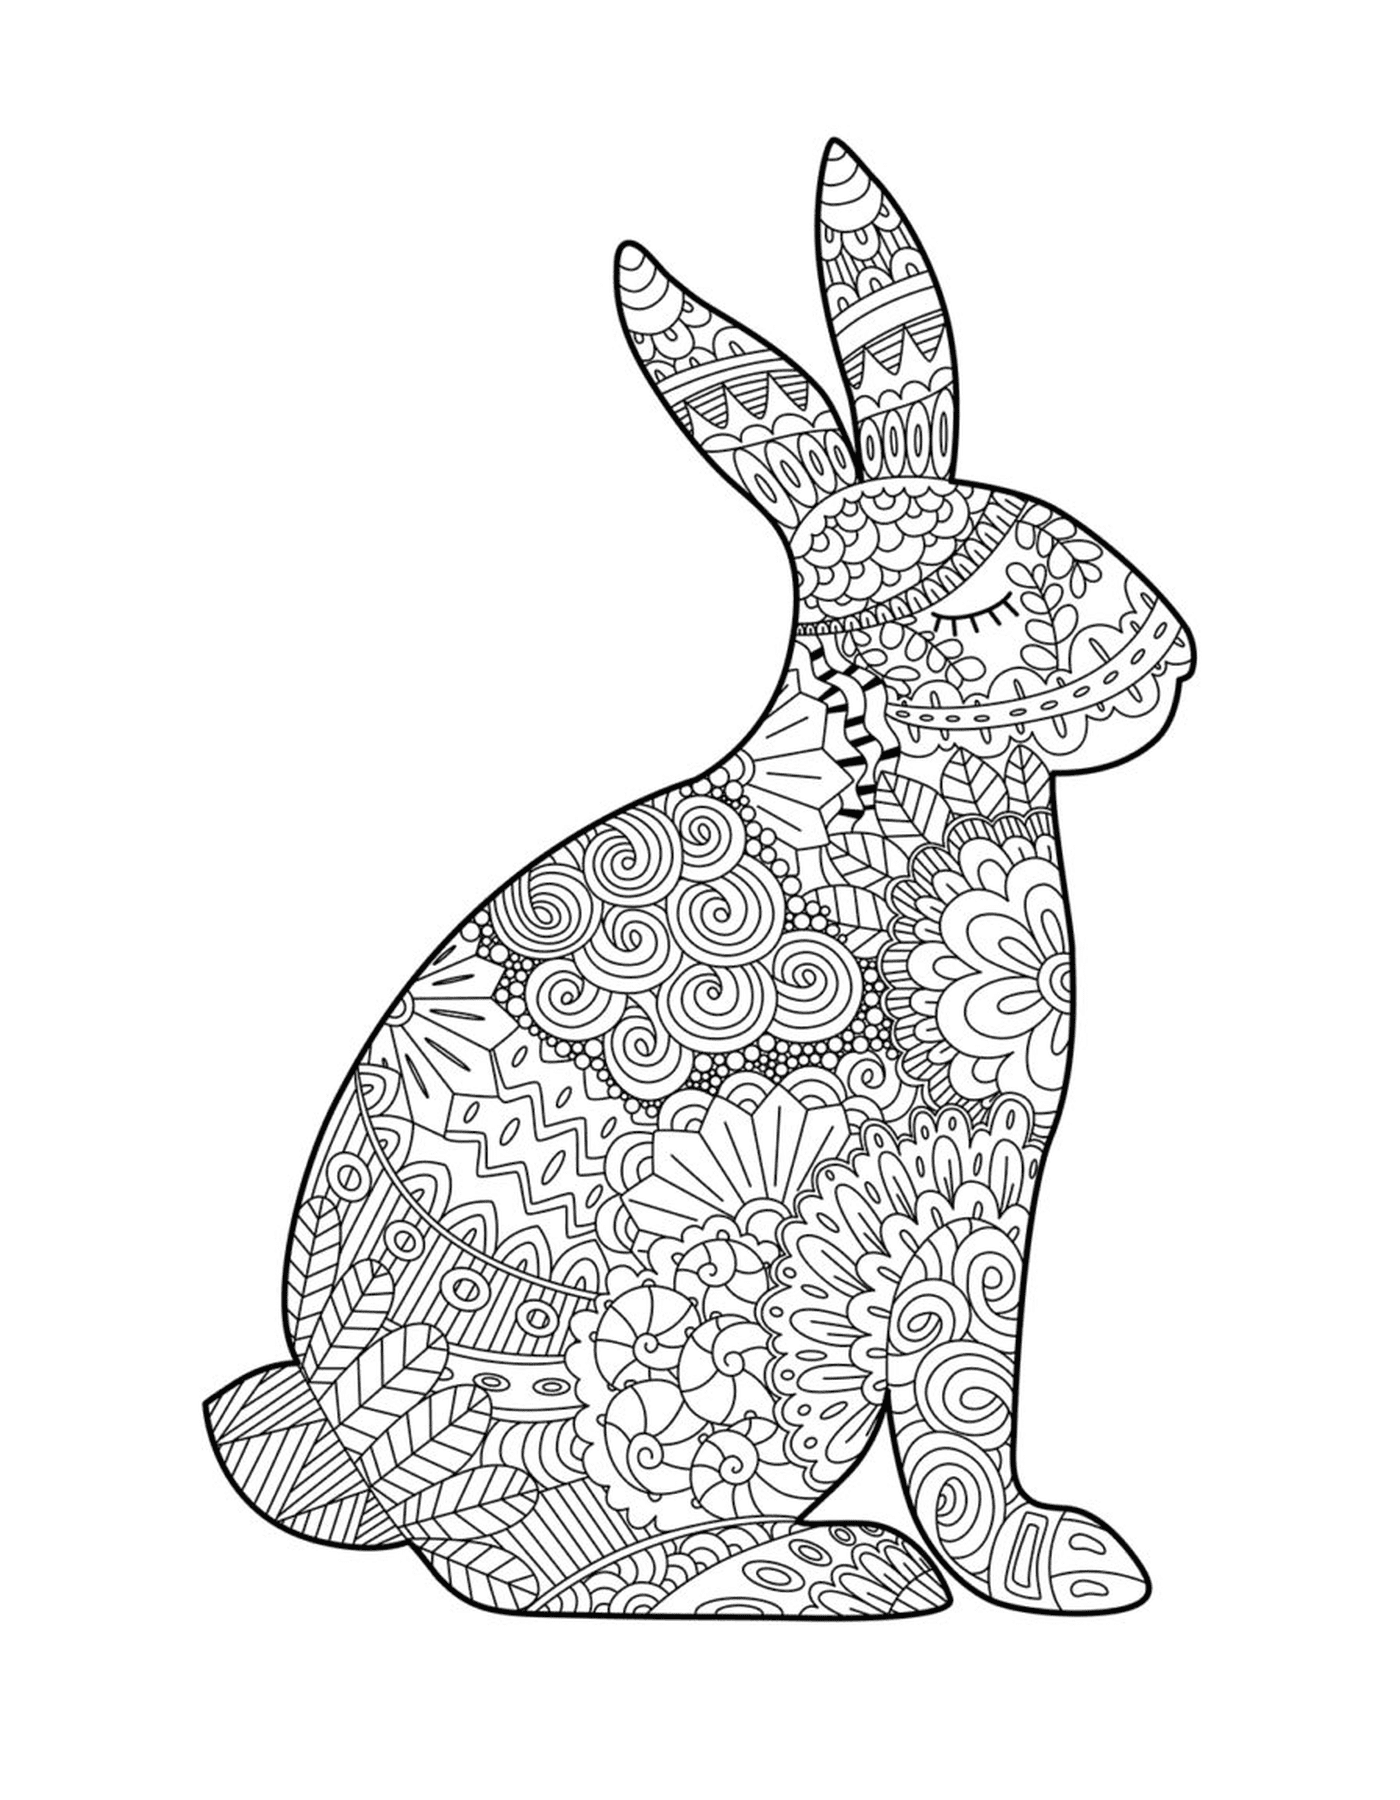  Jentángulo de conejo adulto de Pascua 